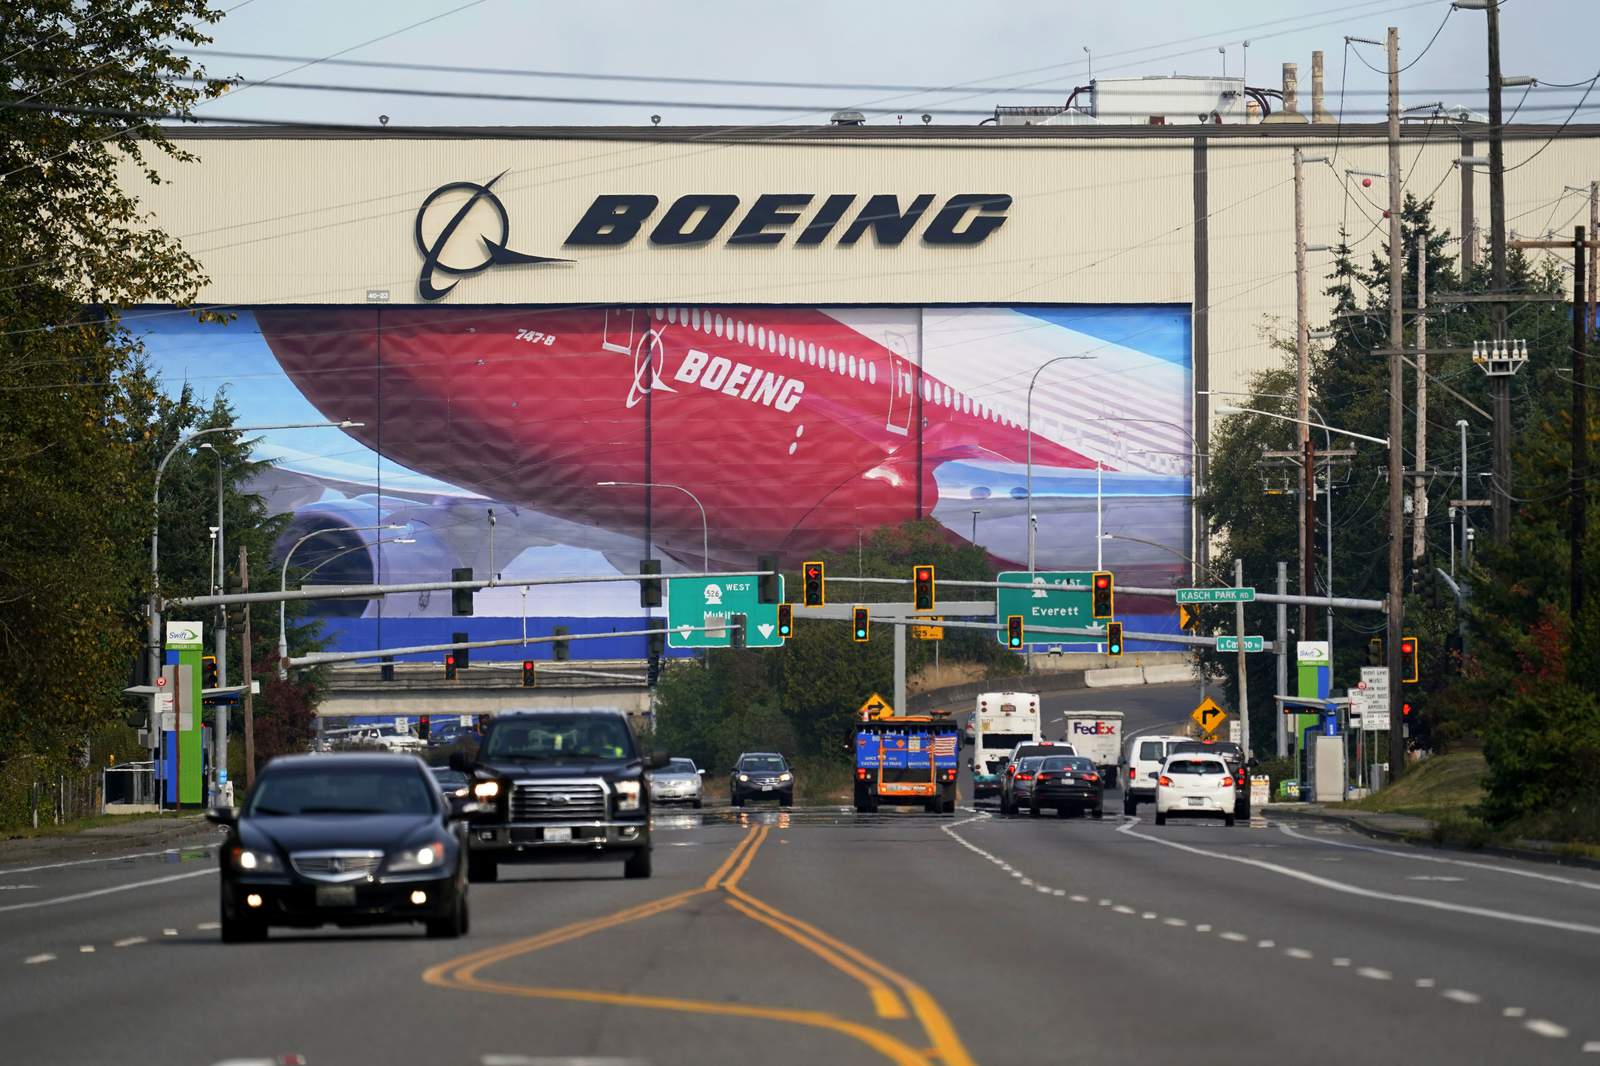 Boeing sees uptick in airplane orders as travel picks up